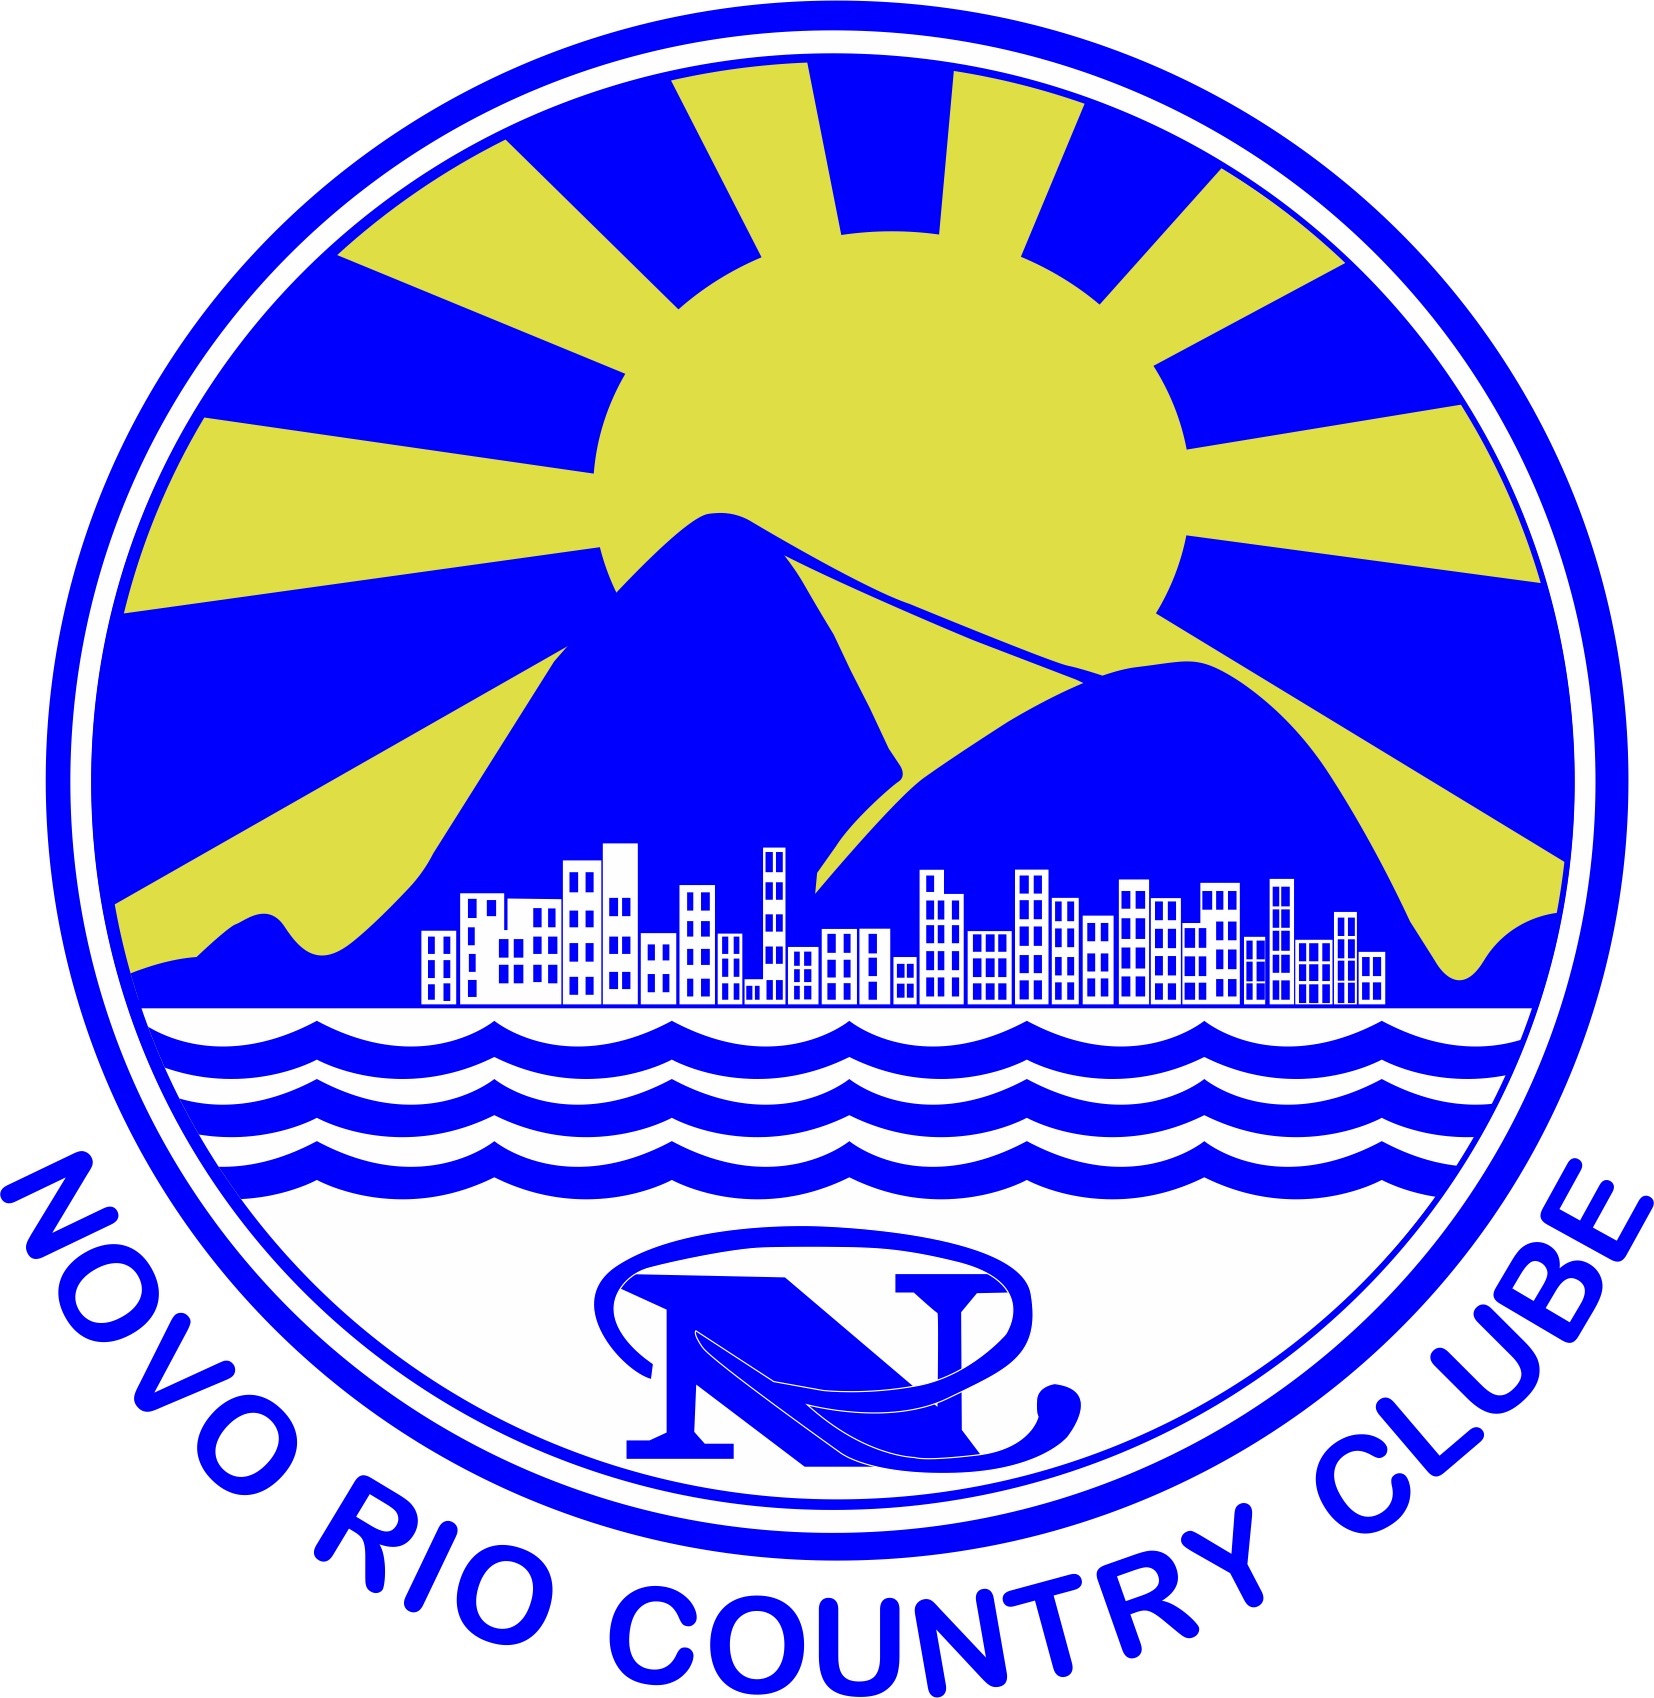 Logo Clube